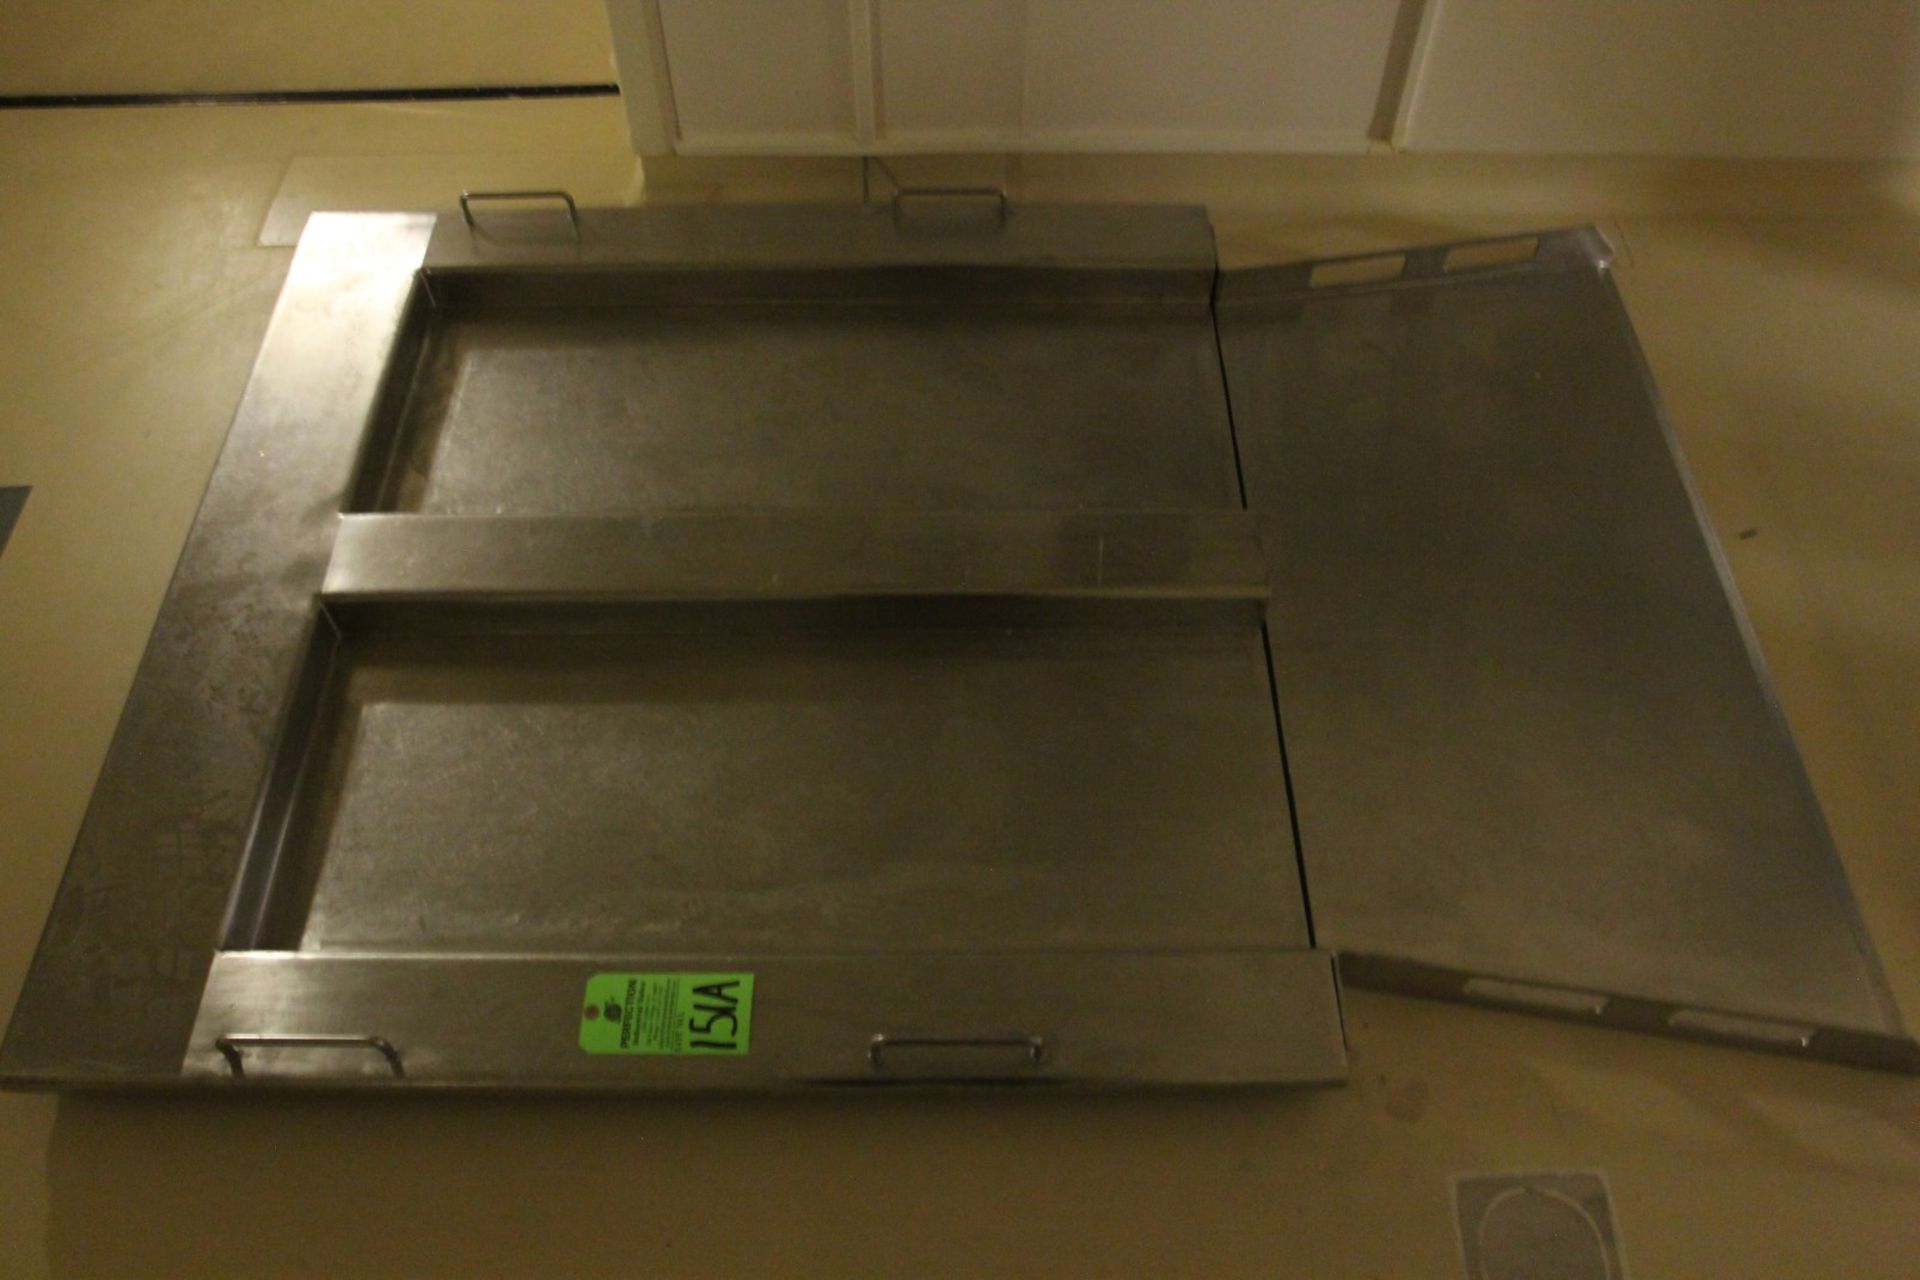 800 kg Stainless Steel Floor Scale w/ Mettler Toledo Lynx Digital Readout, s/n 5493403-5HG - Bild 2 aus 5